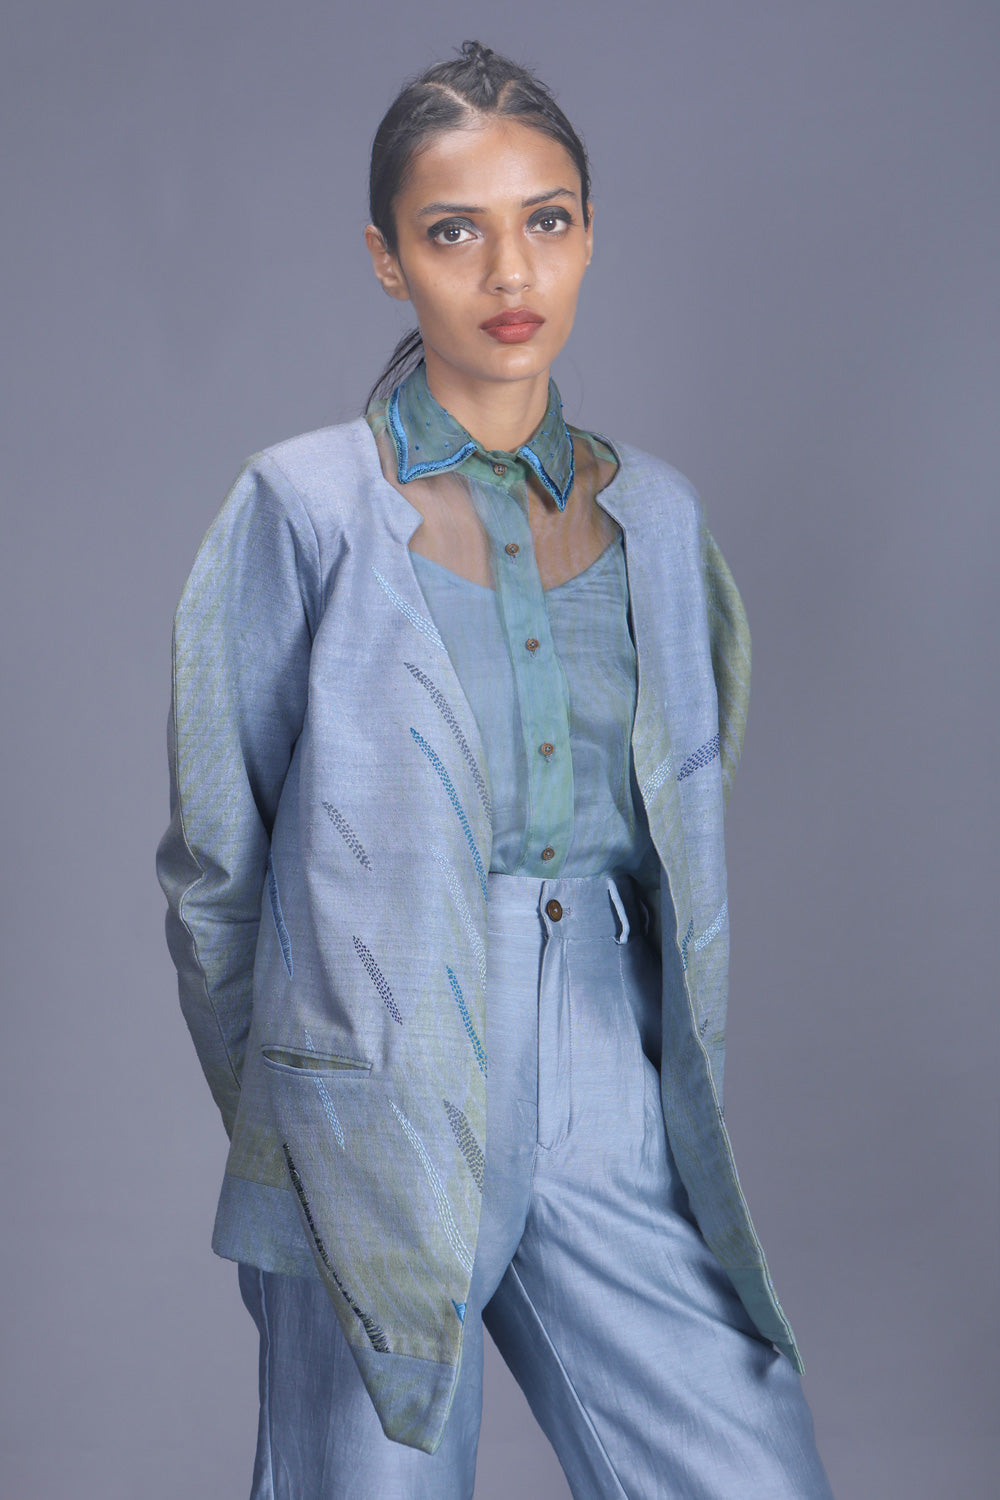 Blue Embroidered Jacket Overlays Between the Lines, Jackets, Matka Silk, Natural, Regular Fit The Loom Art Kamakhyaa